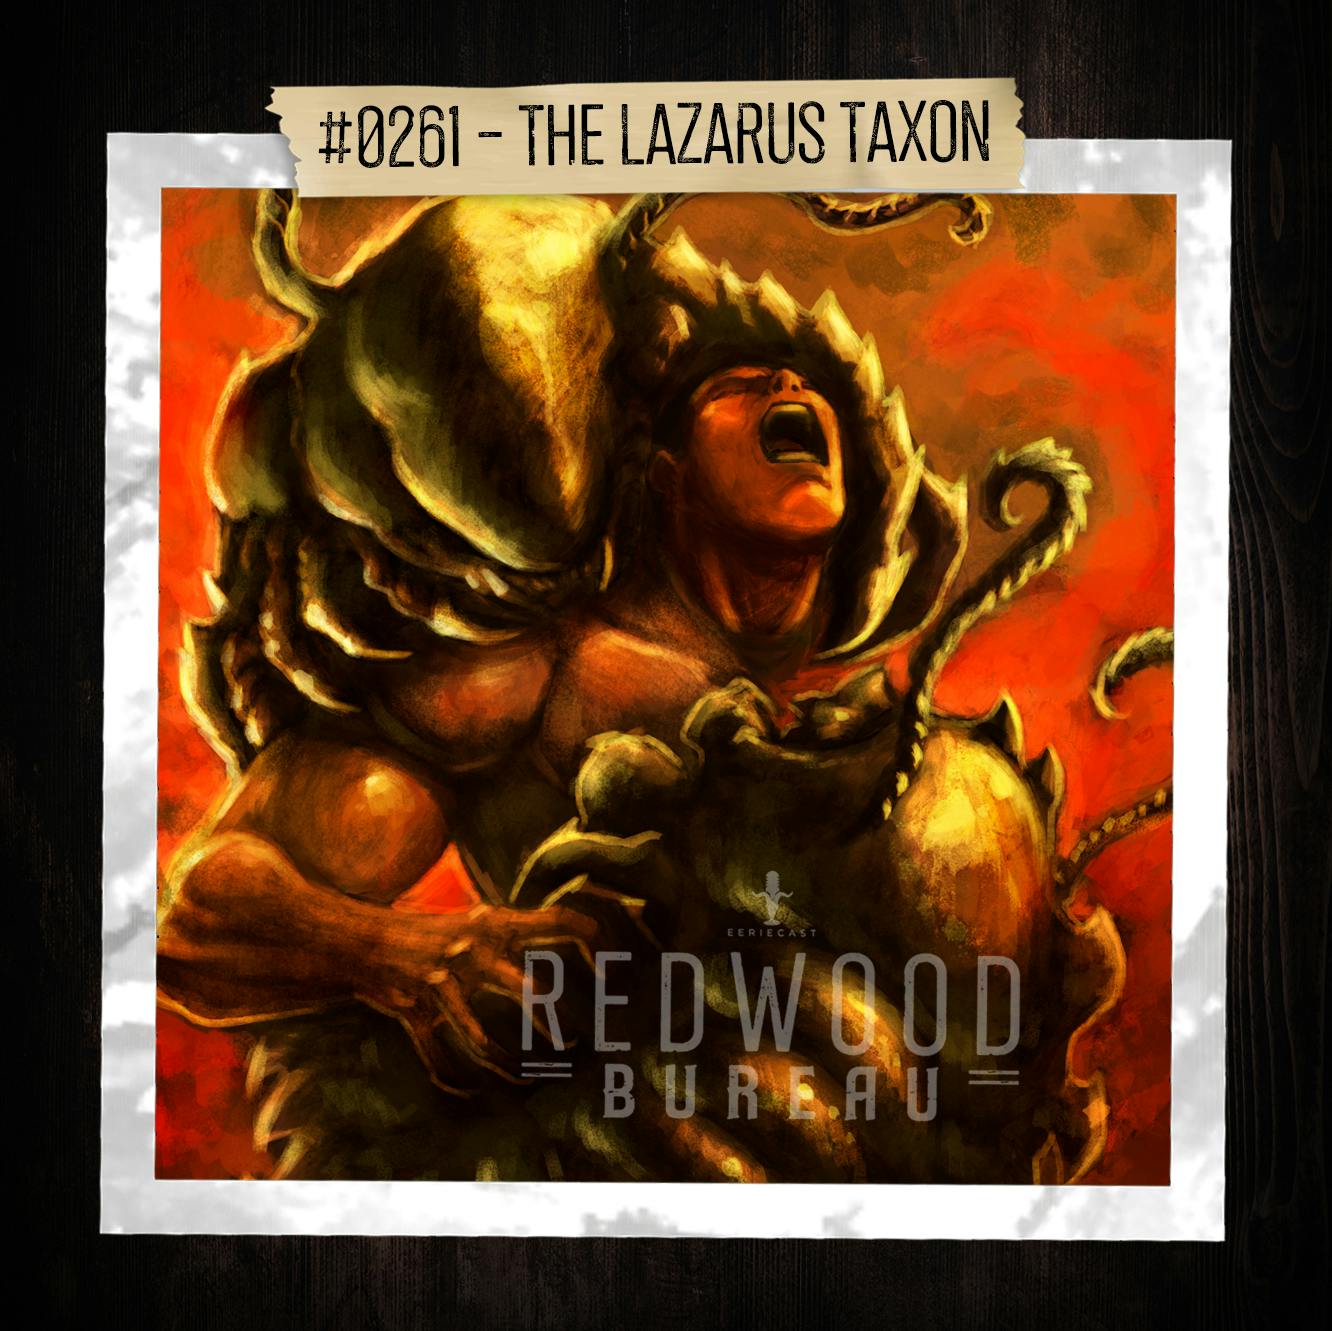 "THE LAZARUS TAXON" - Redwood Bureau Phenomenon #0261